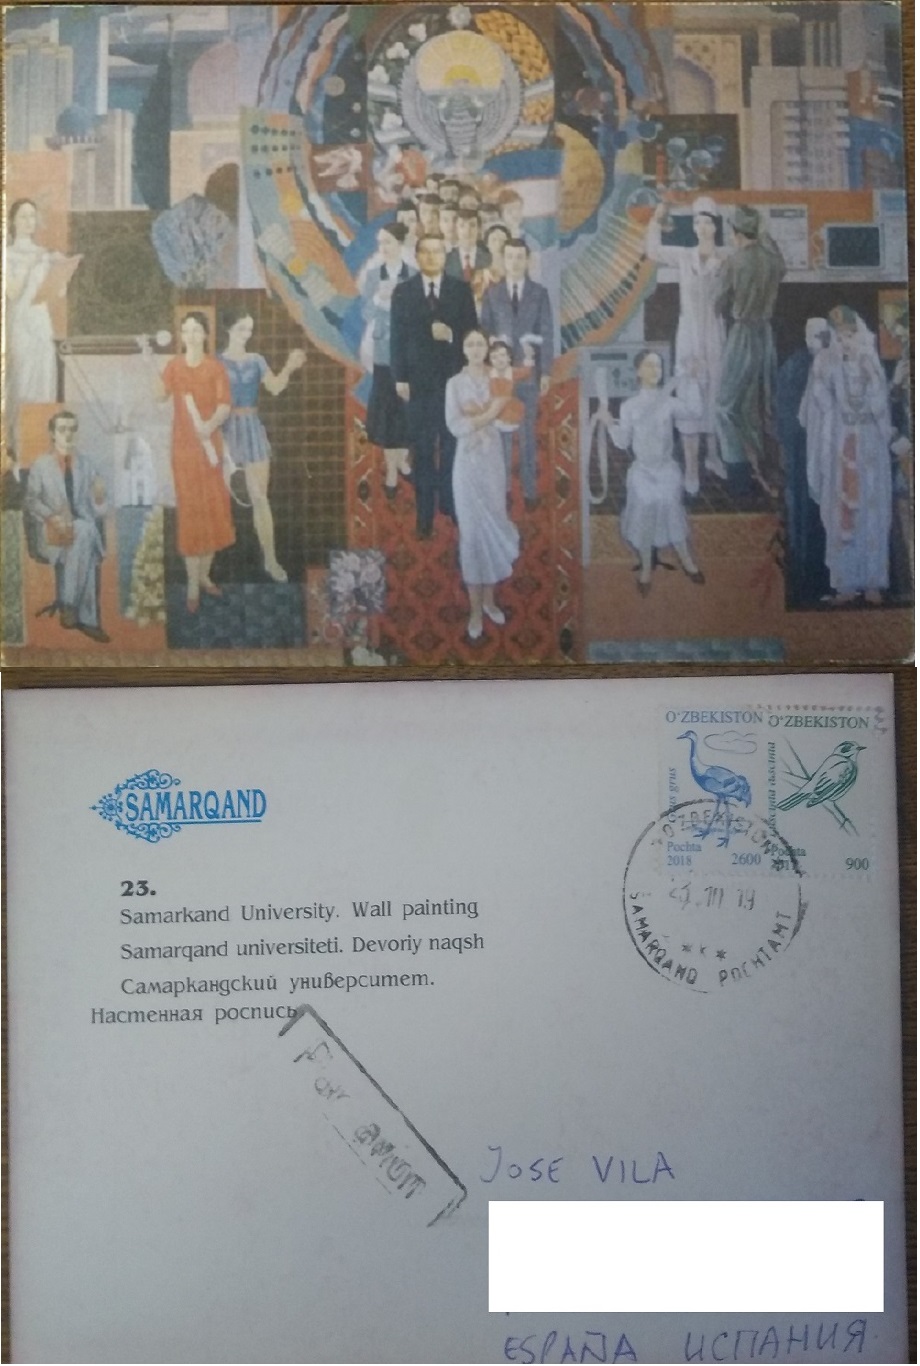 Postales desde Uzbekistan Juan_u11